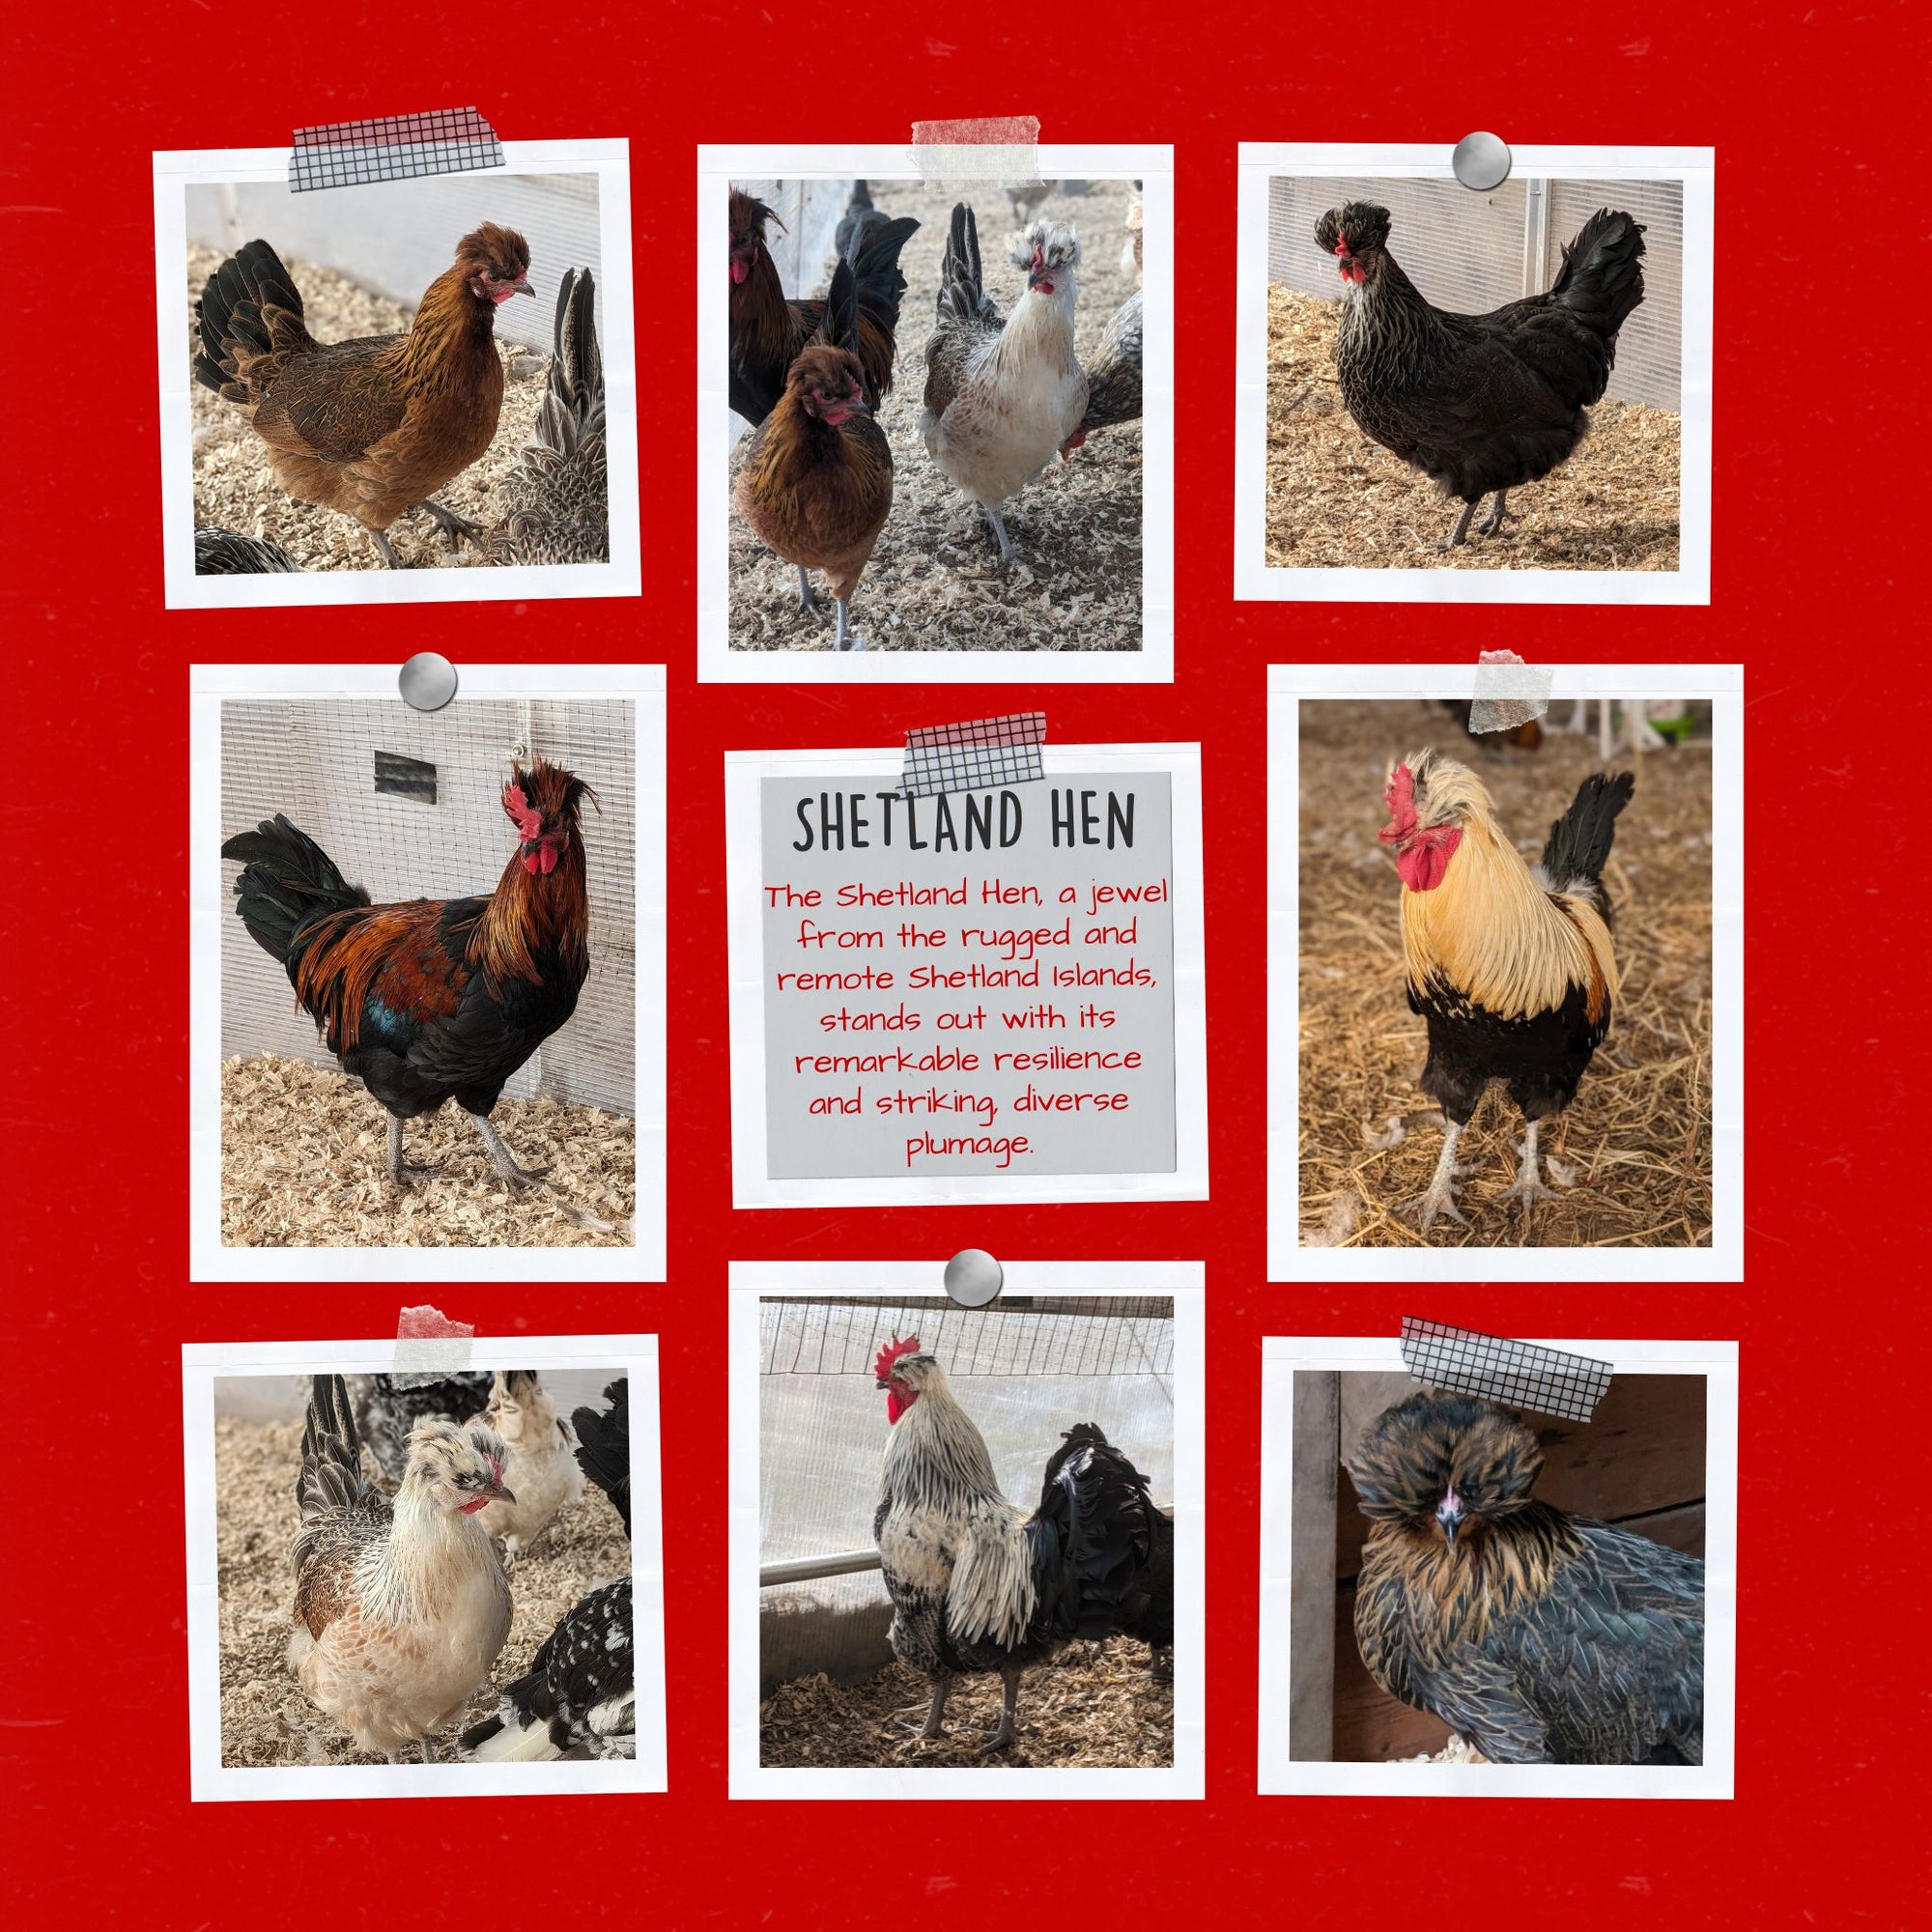 Shetland Hen Chicks - Cluck It All Farms